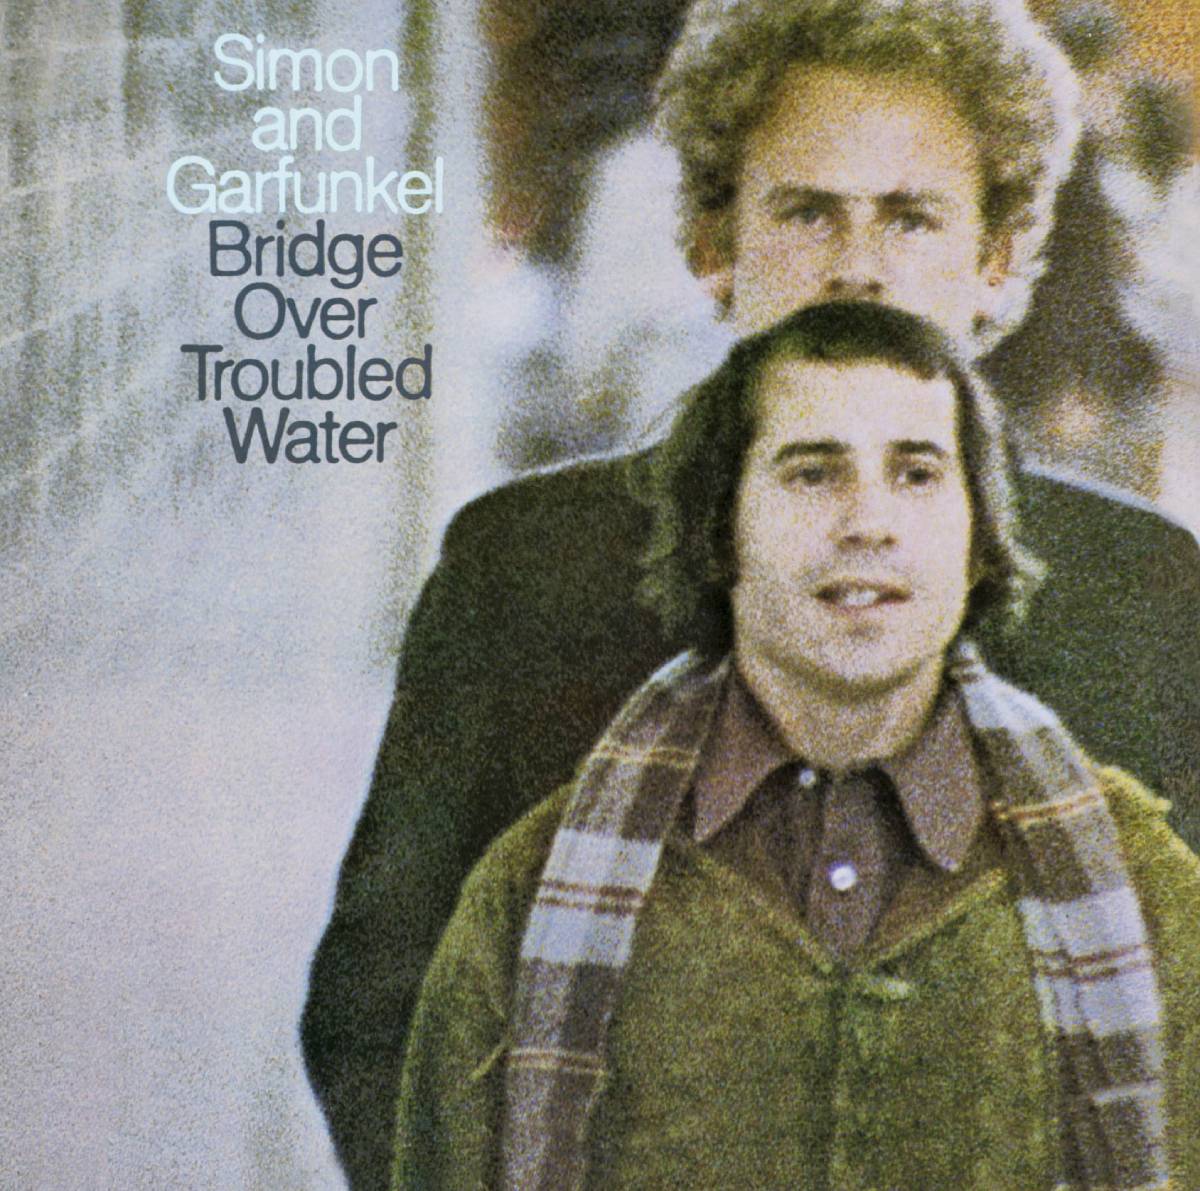 Ponte sobre águas turvas (1970)